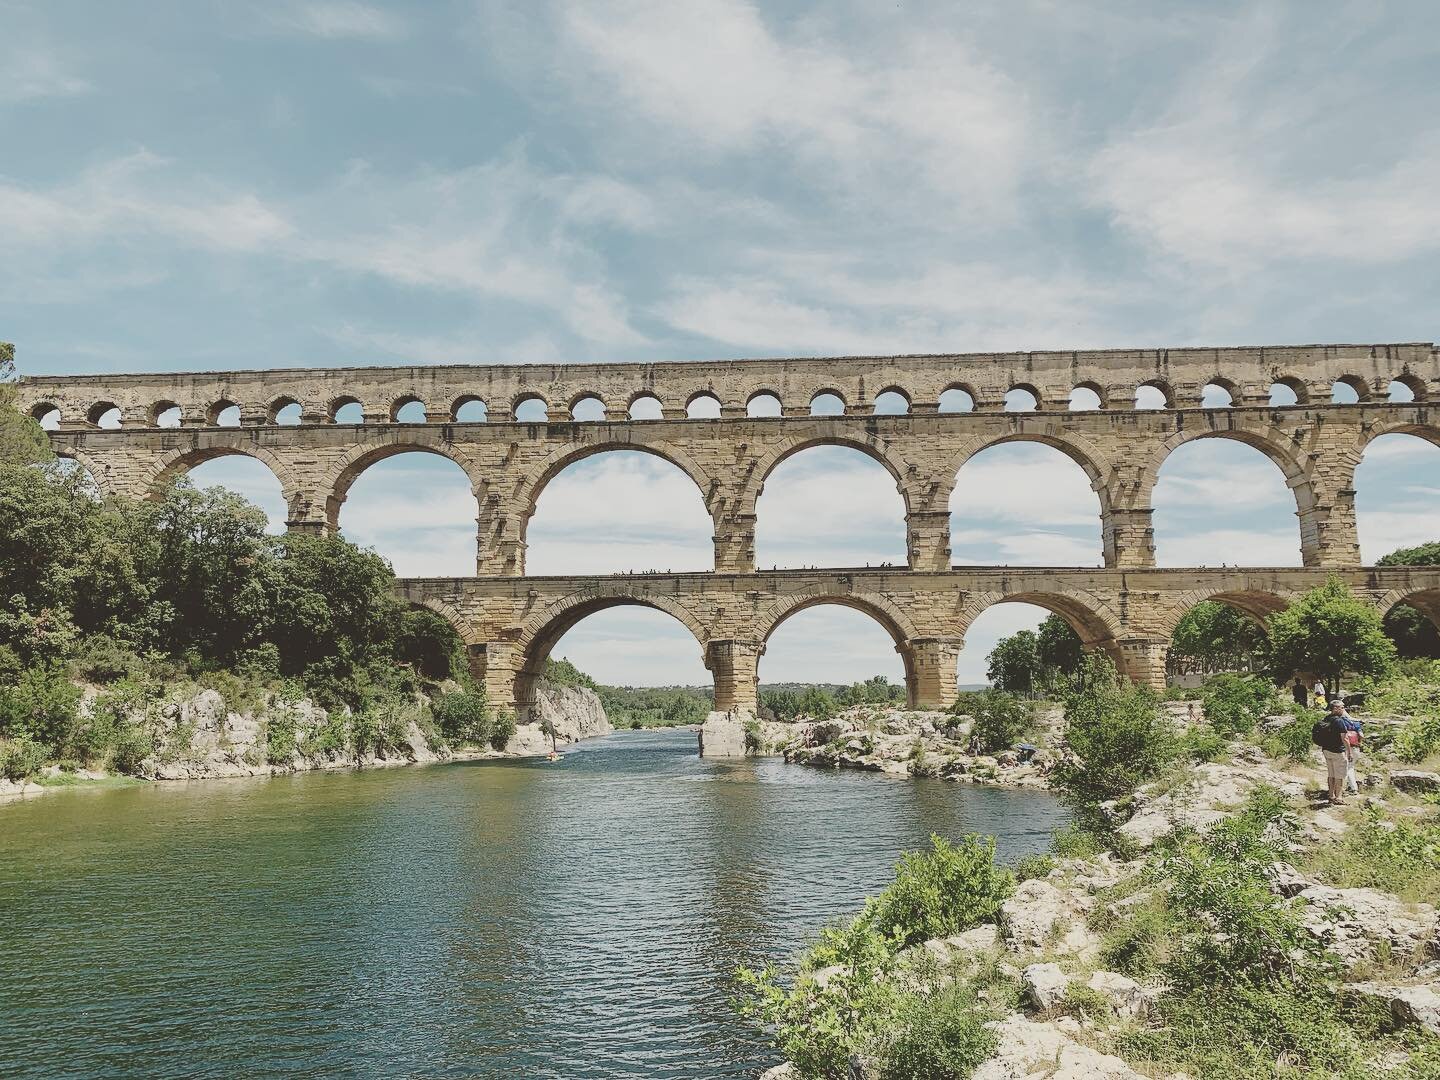 Roman aqueduct: Pont du gard, France
1st century after Christ
.
.
.
.
.
#france #romanempire #acueducto #aqueduct #patrimoine #unescoworldheritage #unesco #engineering #architecture #provence #provencefrance #vanlife #travel #travelphotography #aqu&a